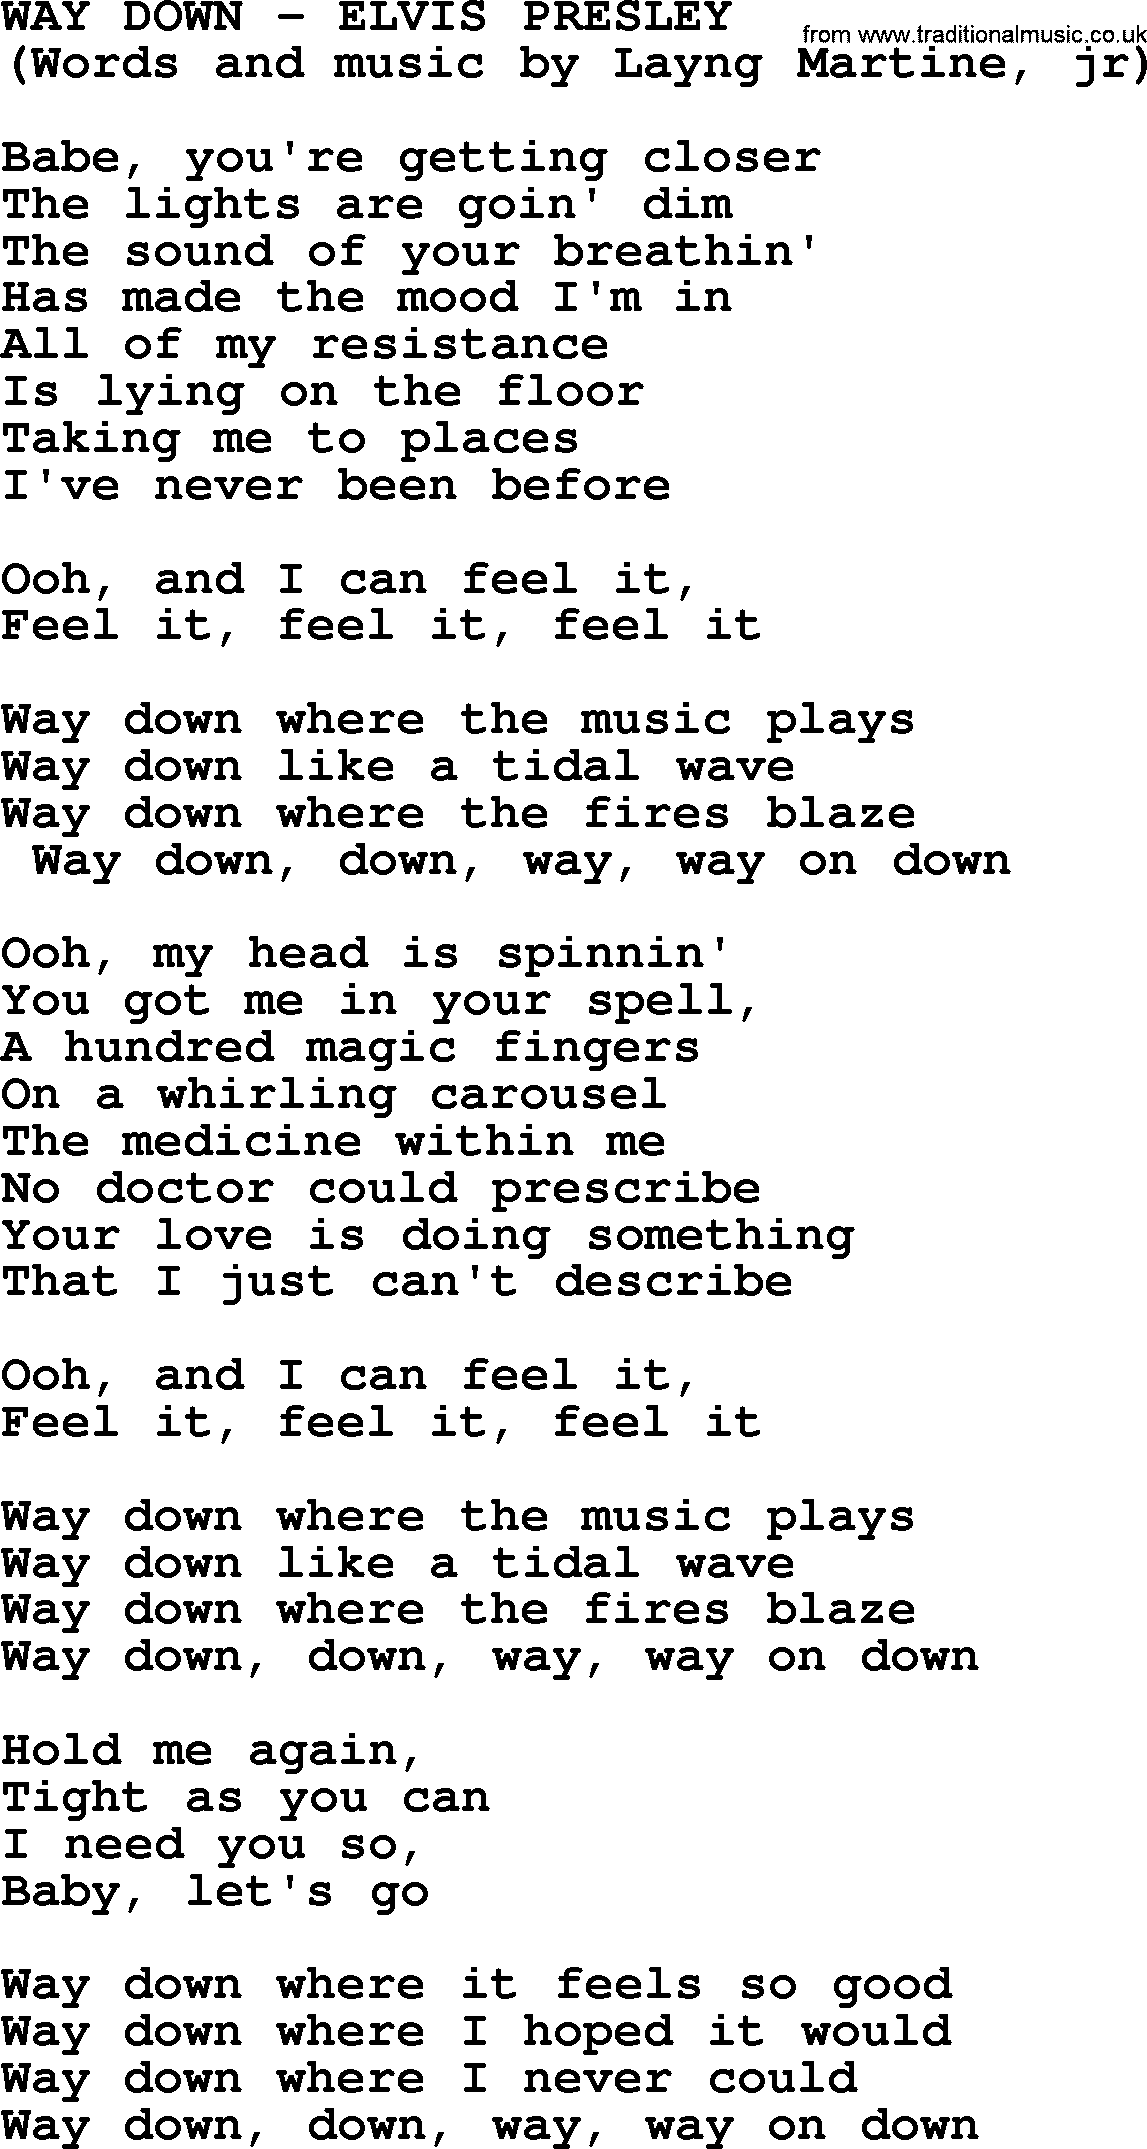 Elvis Presley song: Way Down lyrics